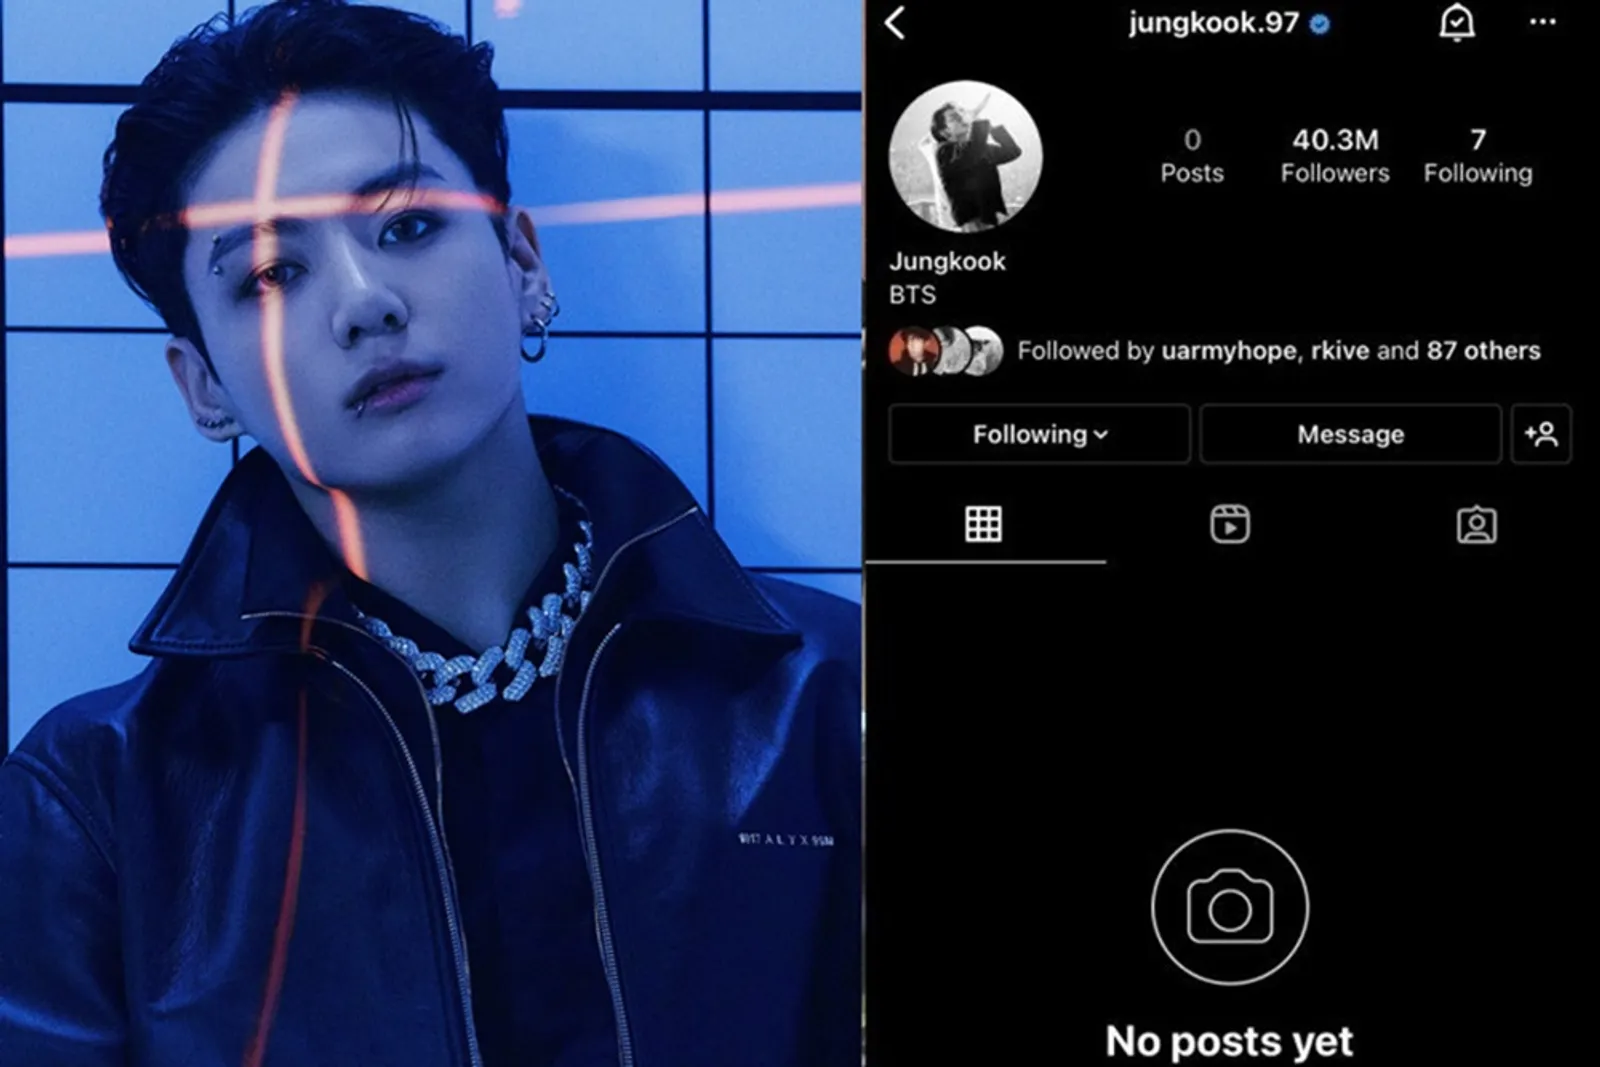 Jungkook 'BTS' Hapus Postingan Instagram, Followers Tetap Naik